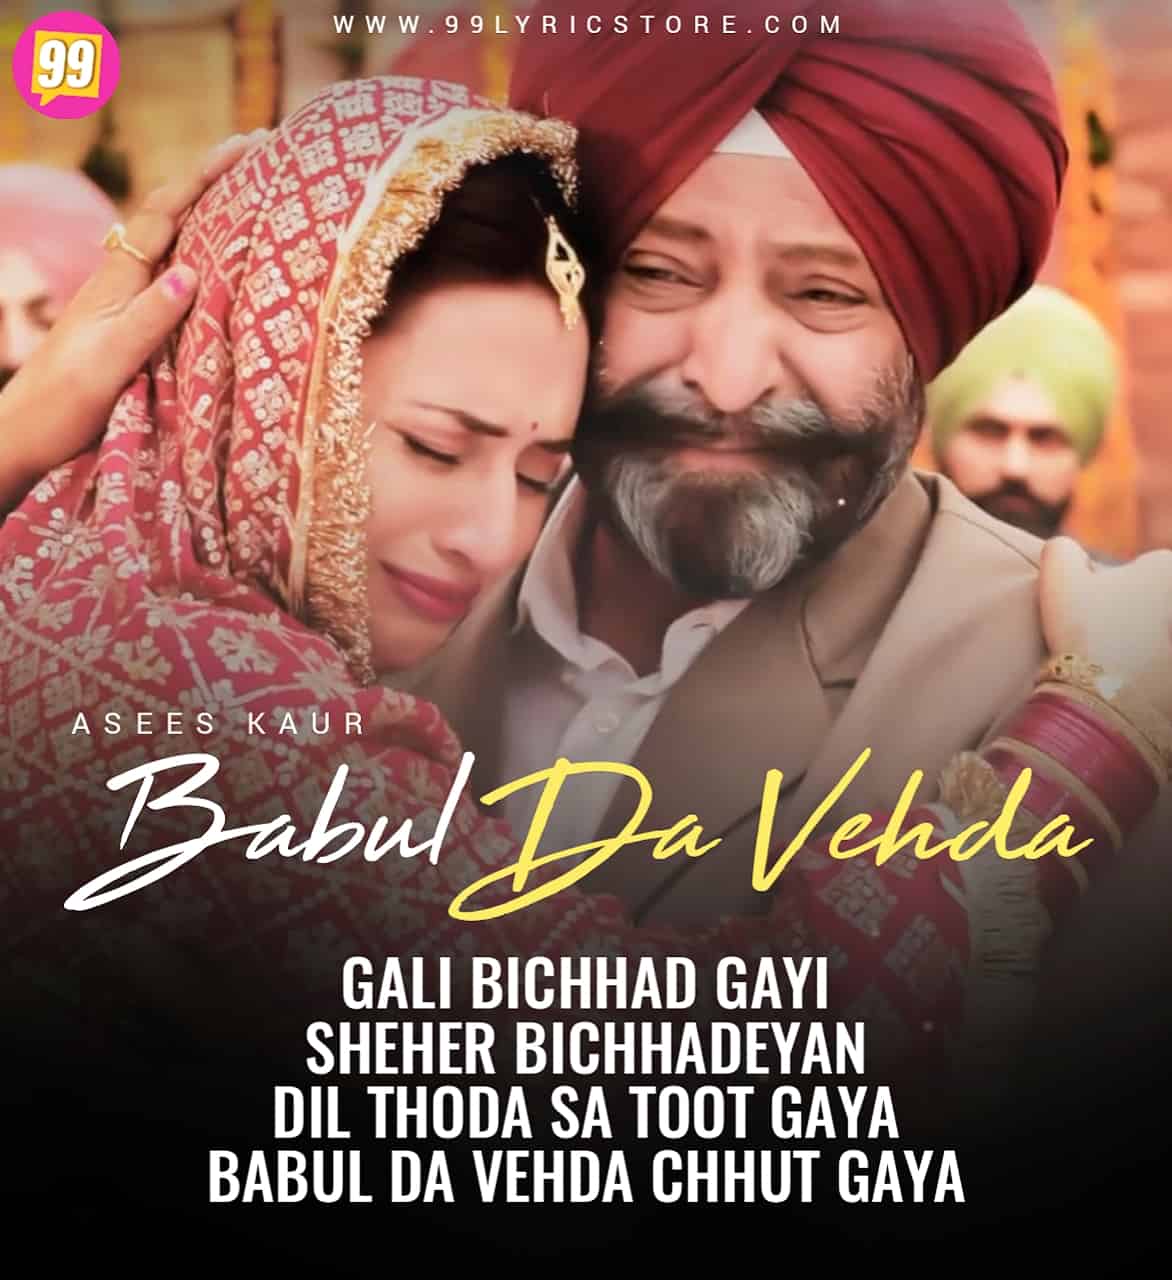 Babul Da Vehda Punjabi Song Image Features Asees Kaur